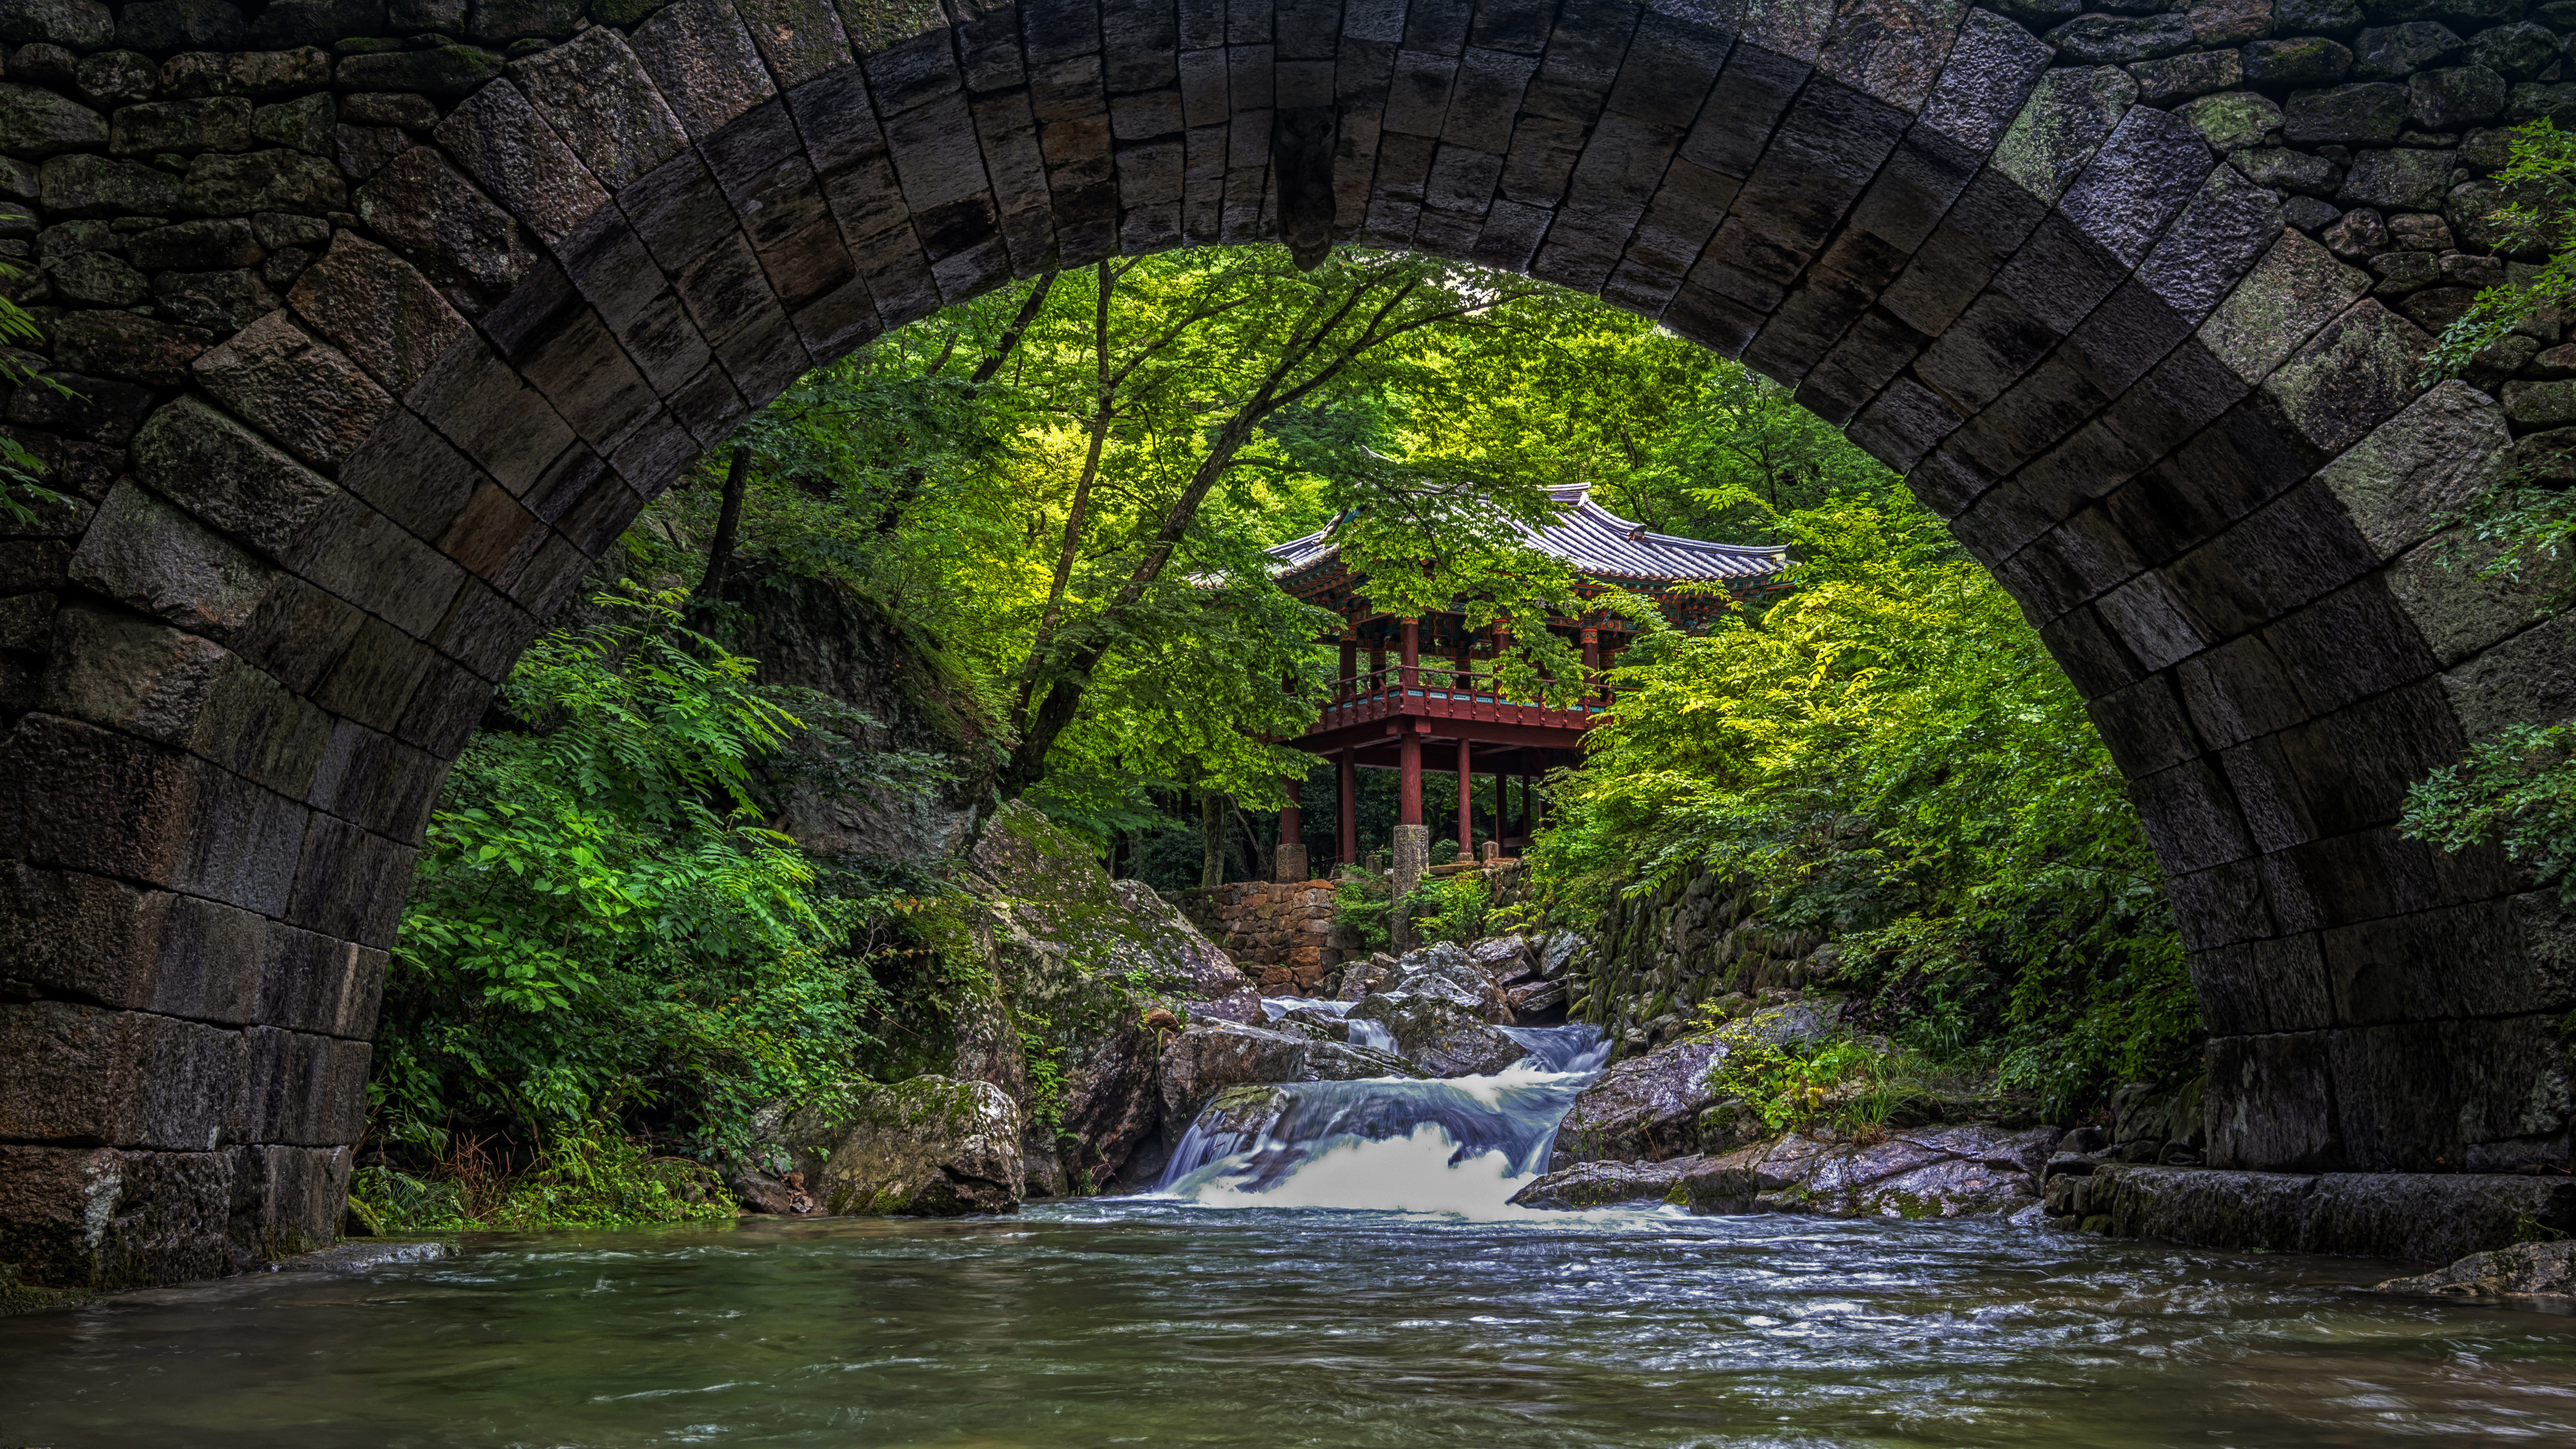 Seungseon Bridge at Seonam Temple in Jogyesan Provincial Park, South Korea by Aaron Choi